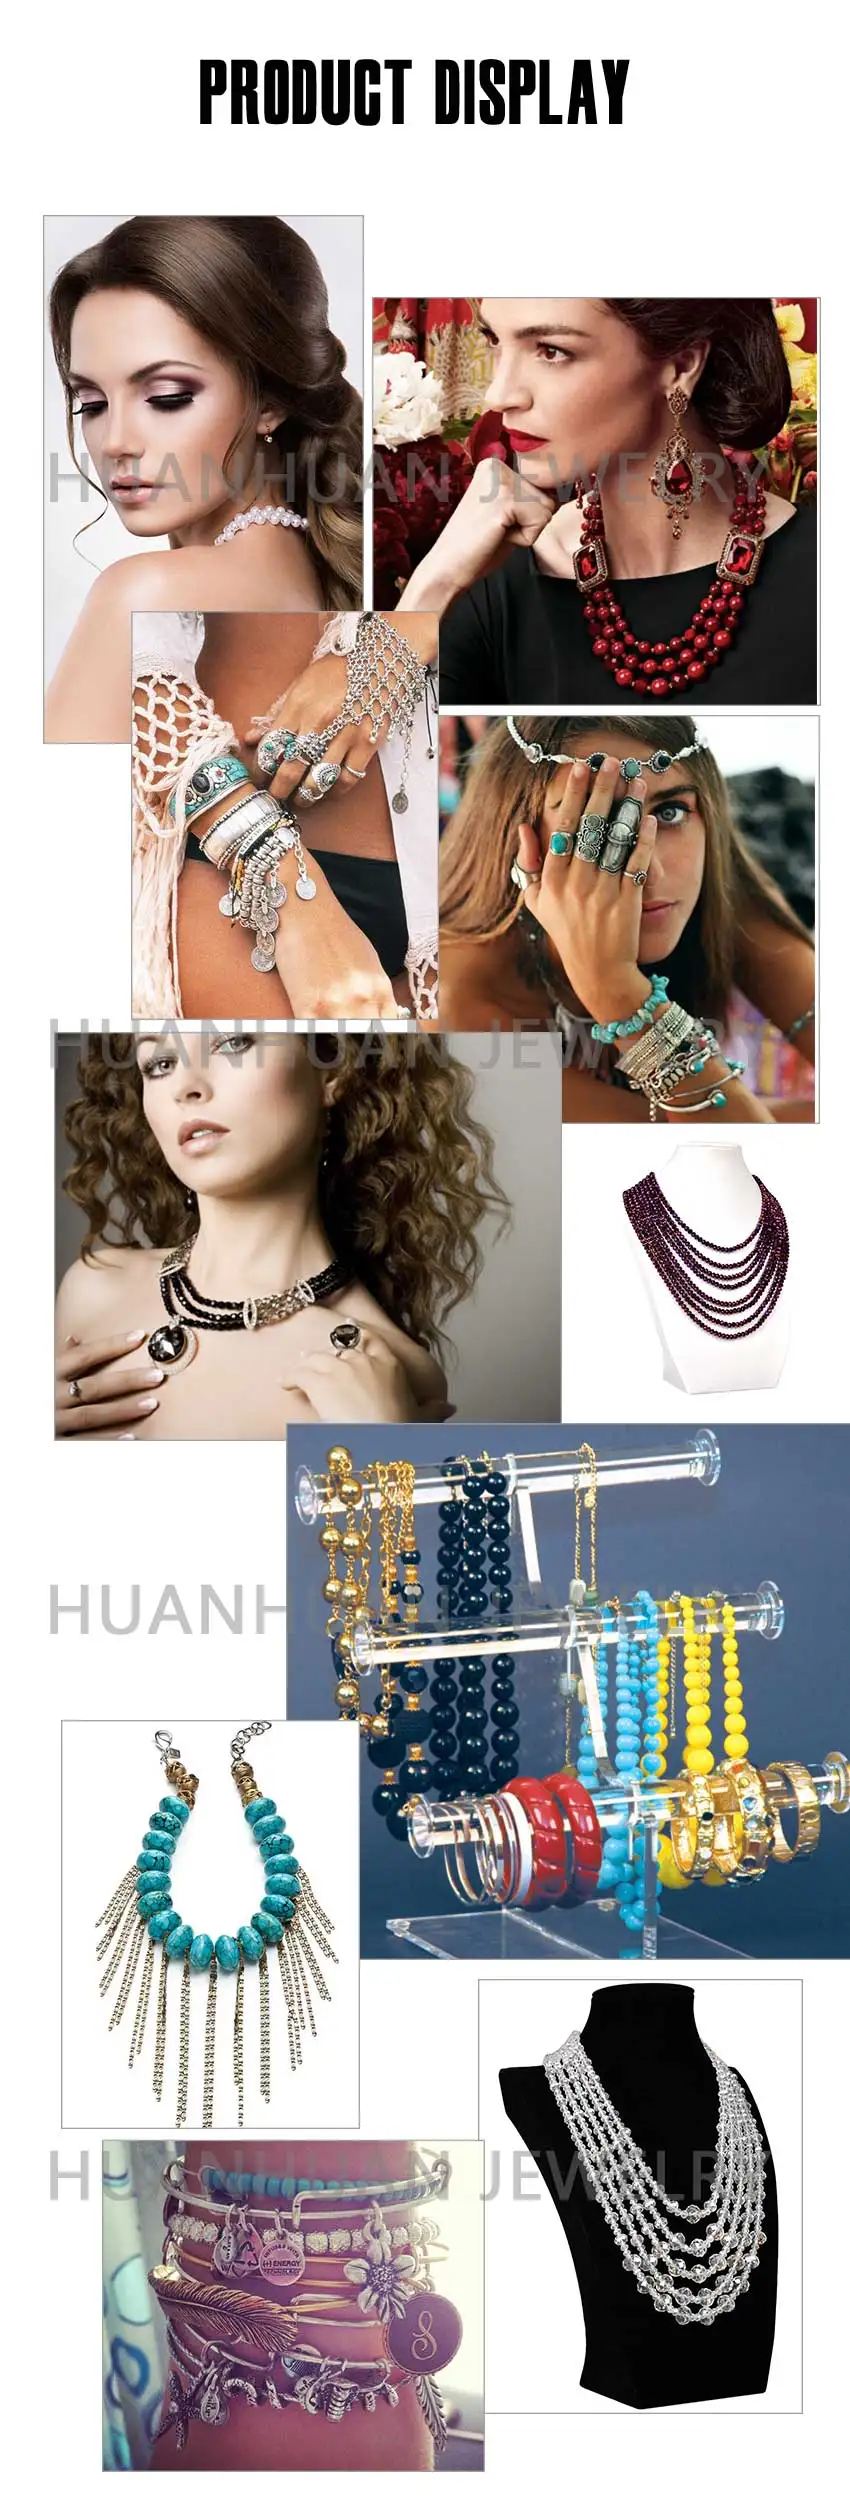 Huanhuan-jewelry_04